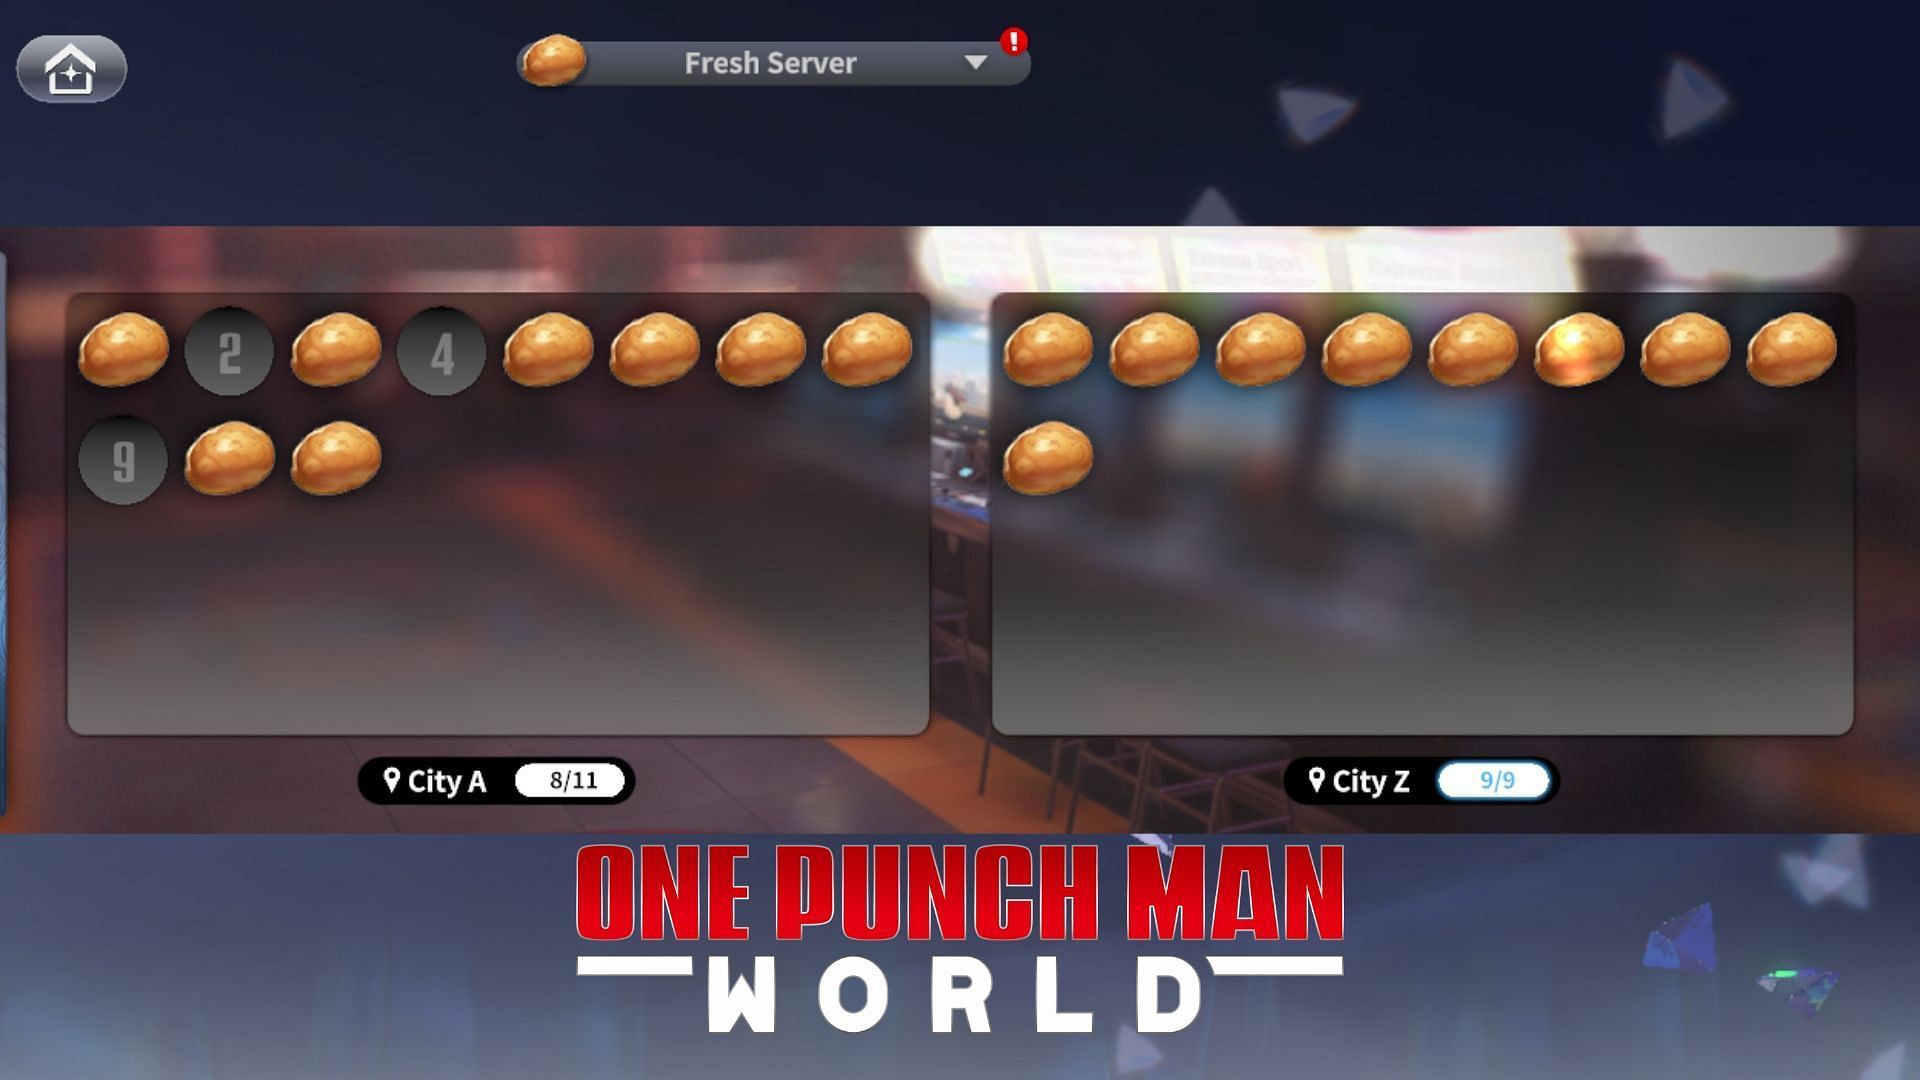 One Punch Man World Fresh Server locations